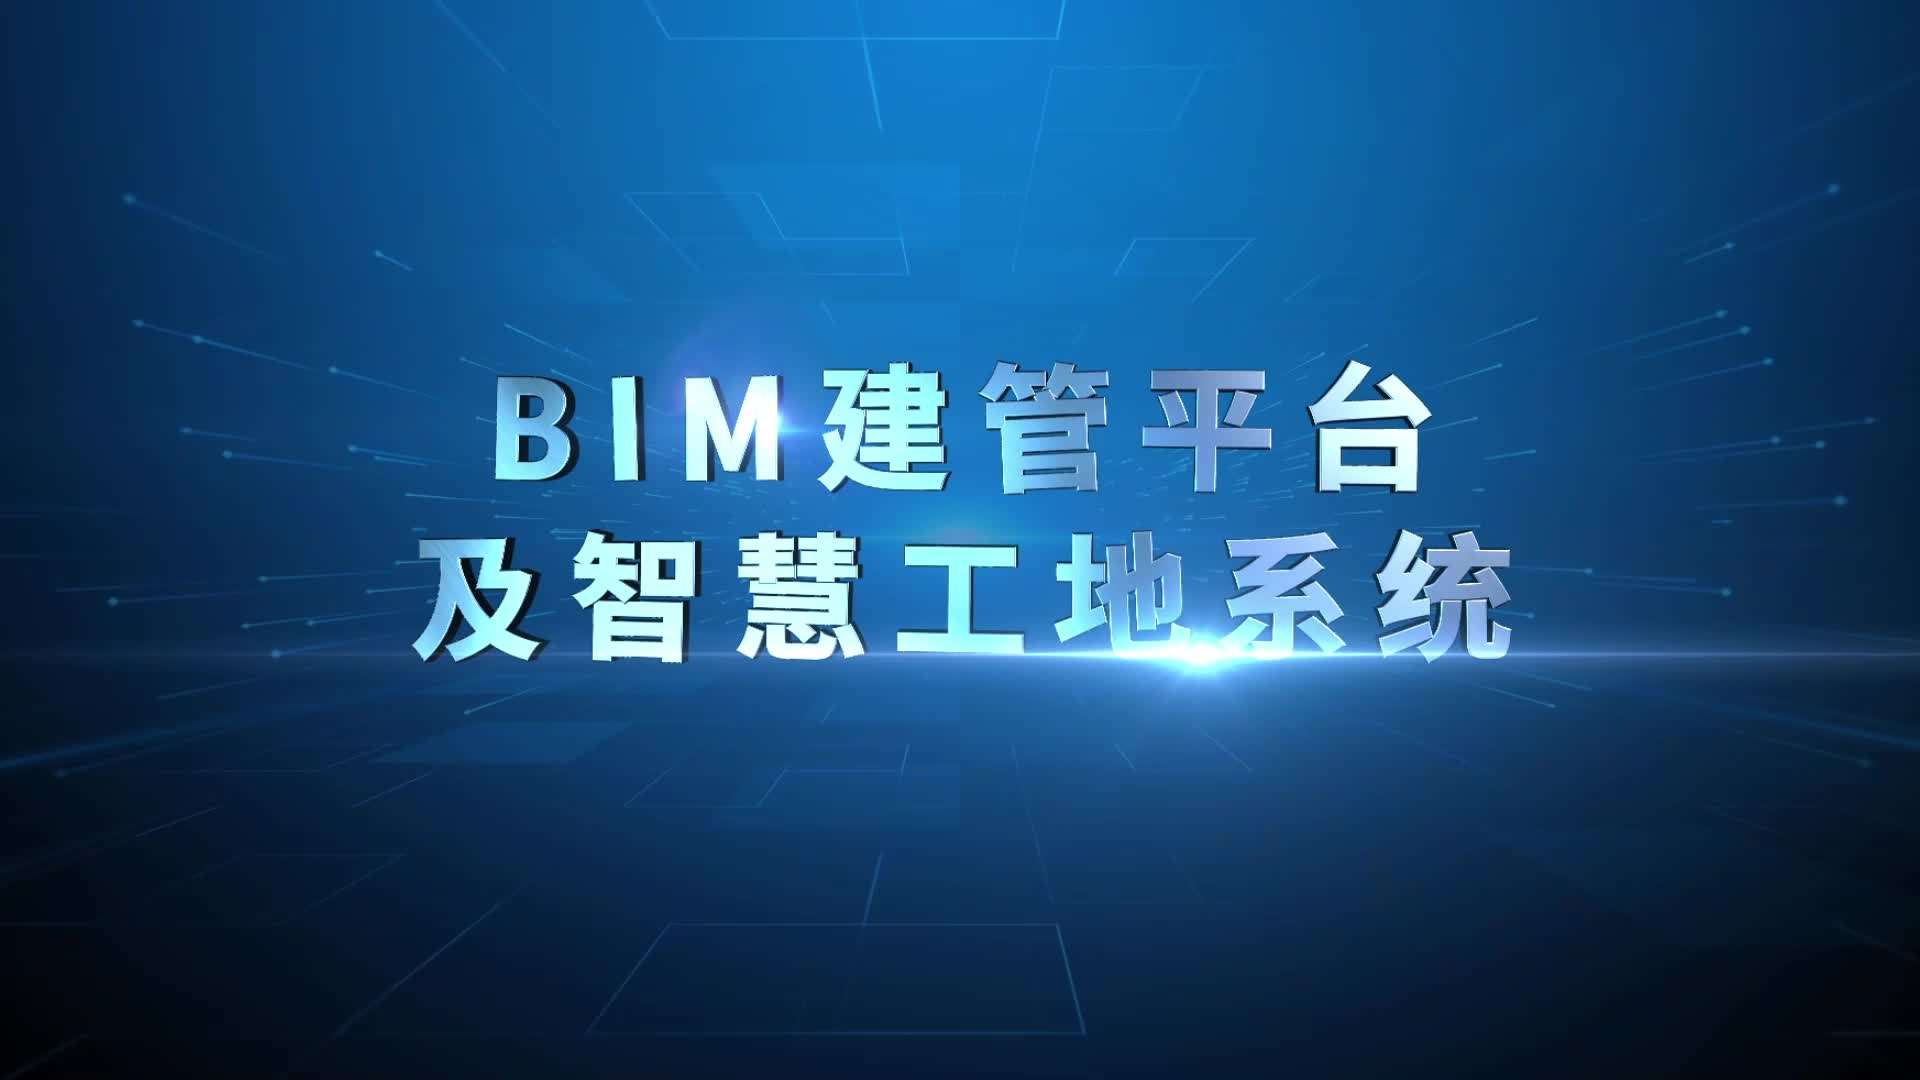 BIM建管平台及智慧工地系统 | 子序元宇宙